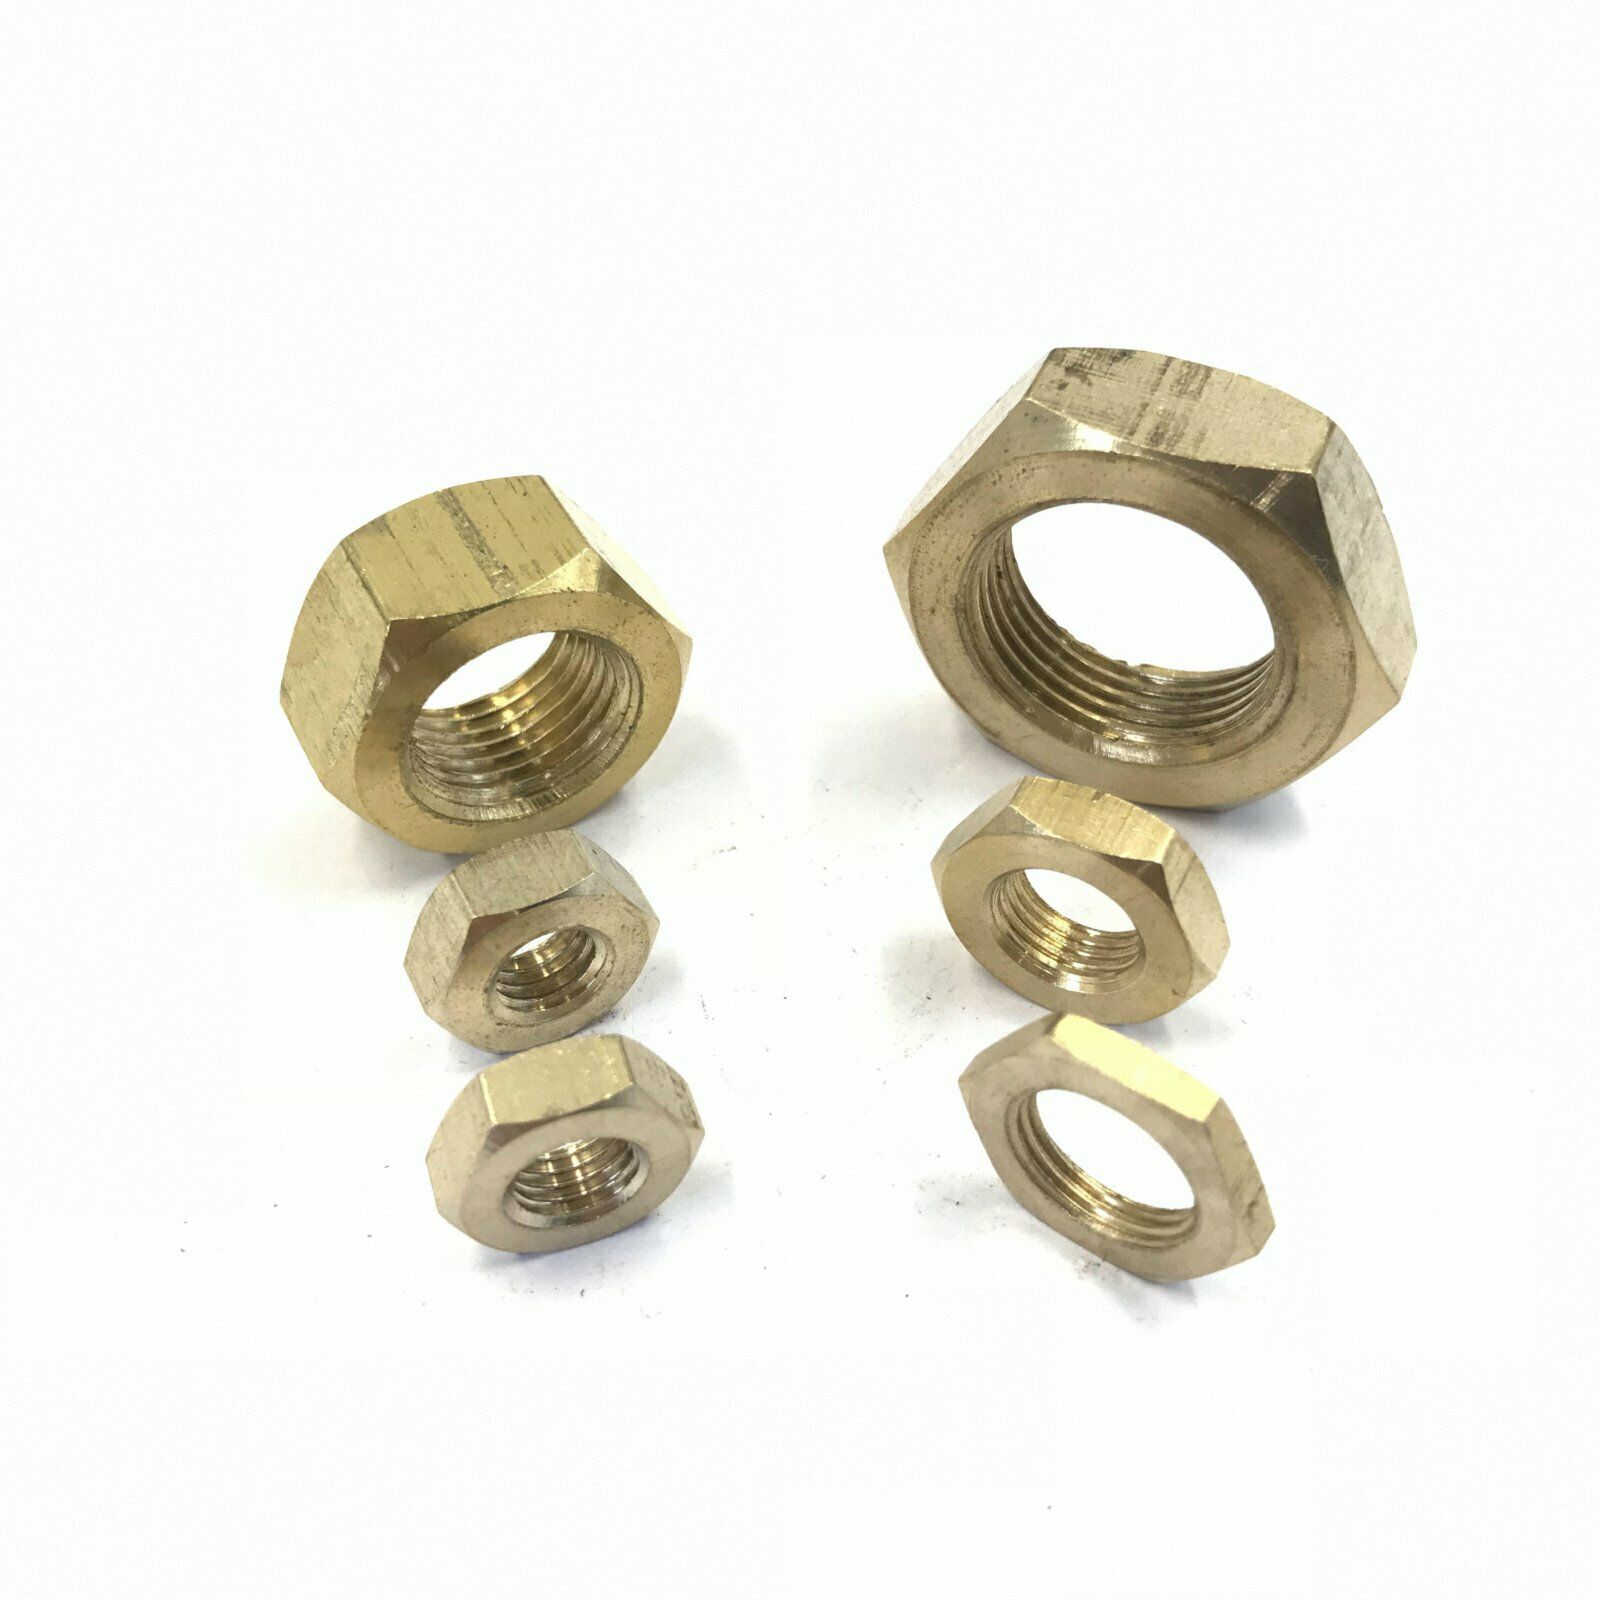 11 Kinds Solid Brass Hex Nuts Right Hand Thread Assortment Kit M1.4 - M12 Set